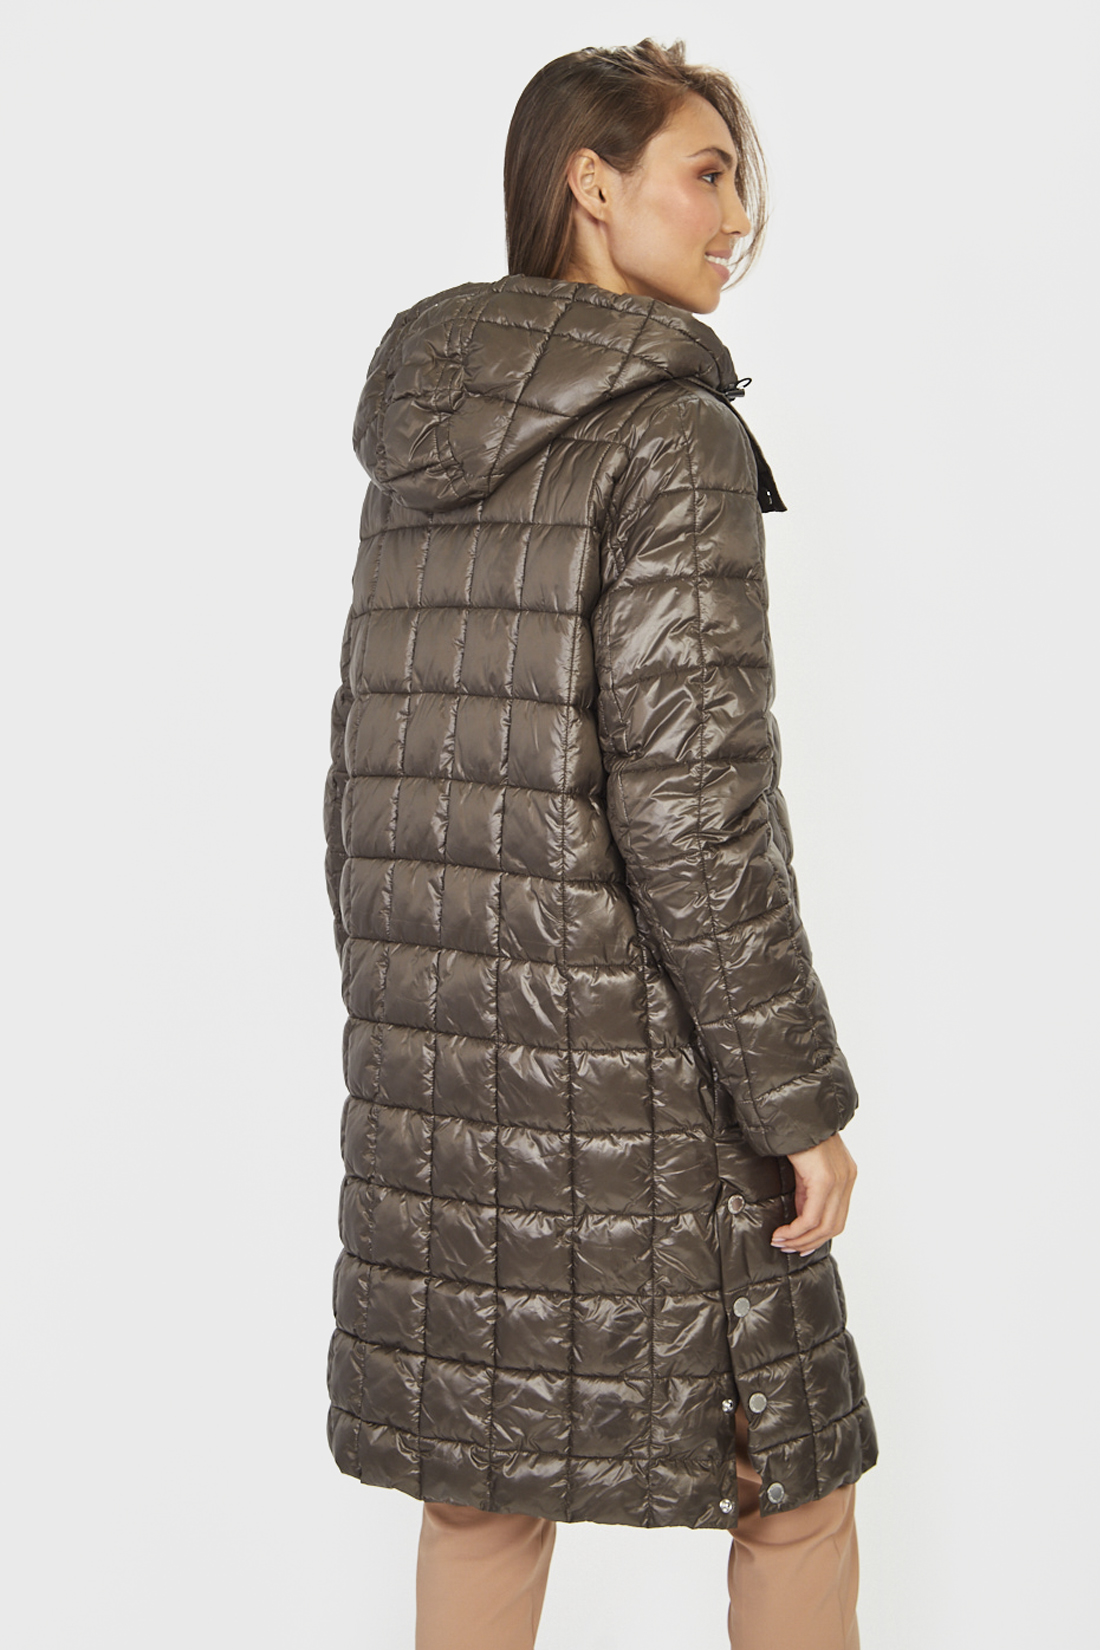 Куртка (Эко пух) (арт. baon B041545), размер XXL, цвет коричневый Куртка (Эко пух) (арт. baon B041545) - фото 2